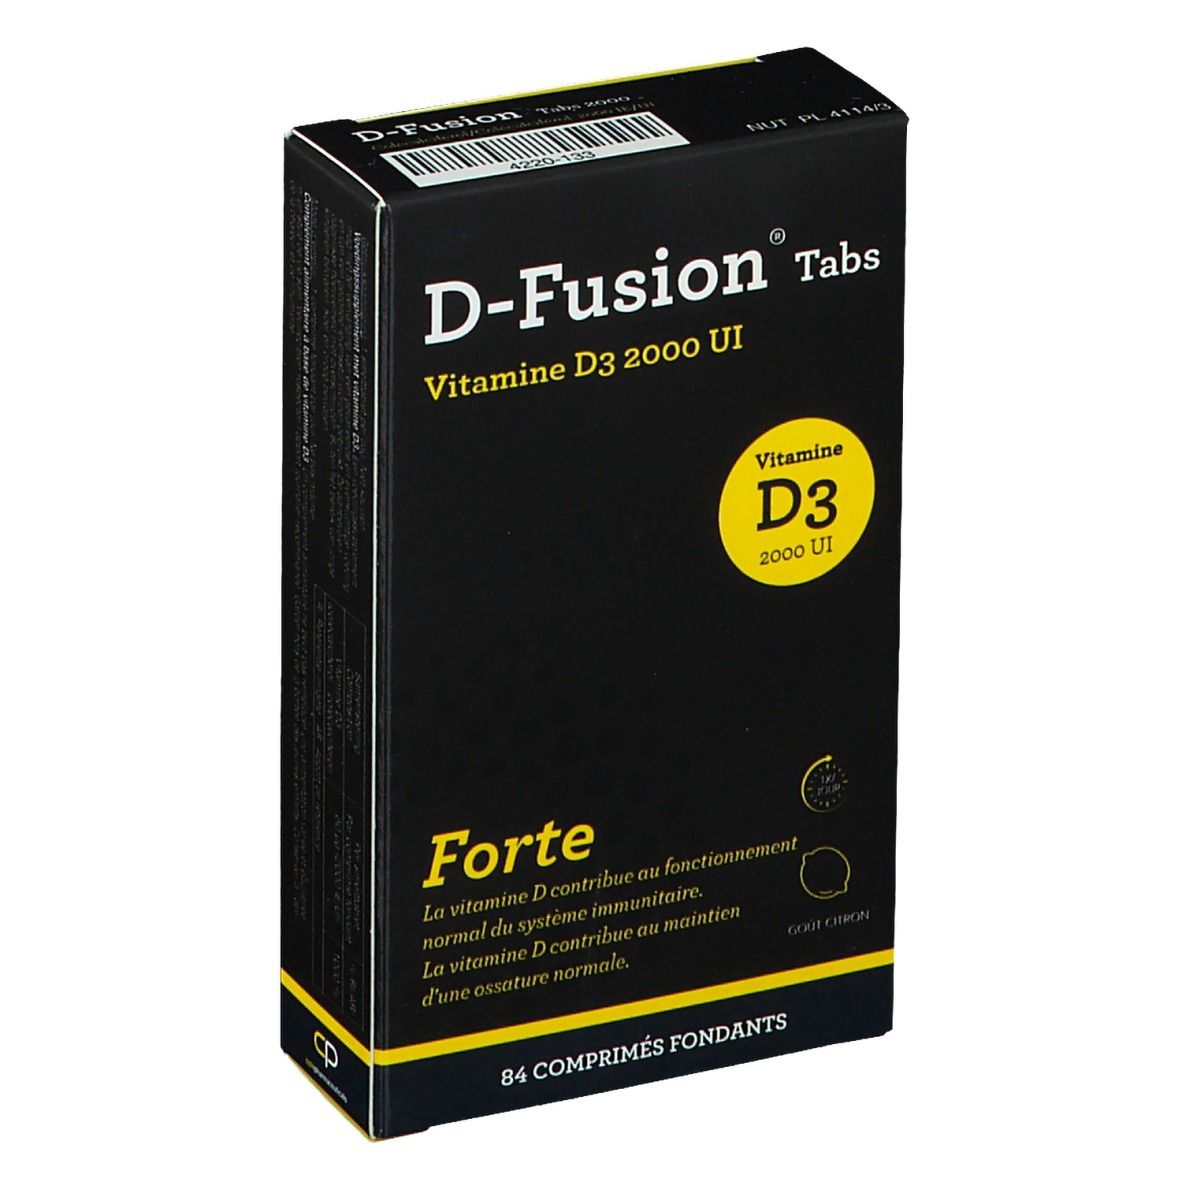 Image of D-Fusion® Tabs Forte Vitamin D3 2000 IU